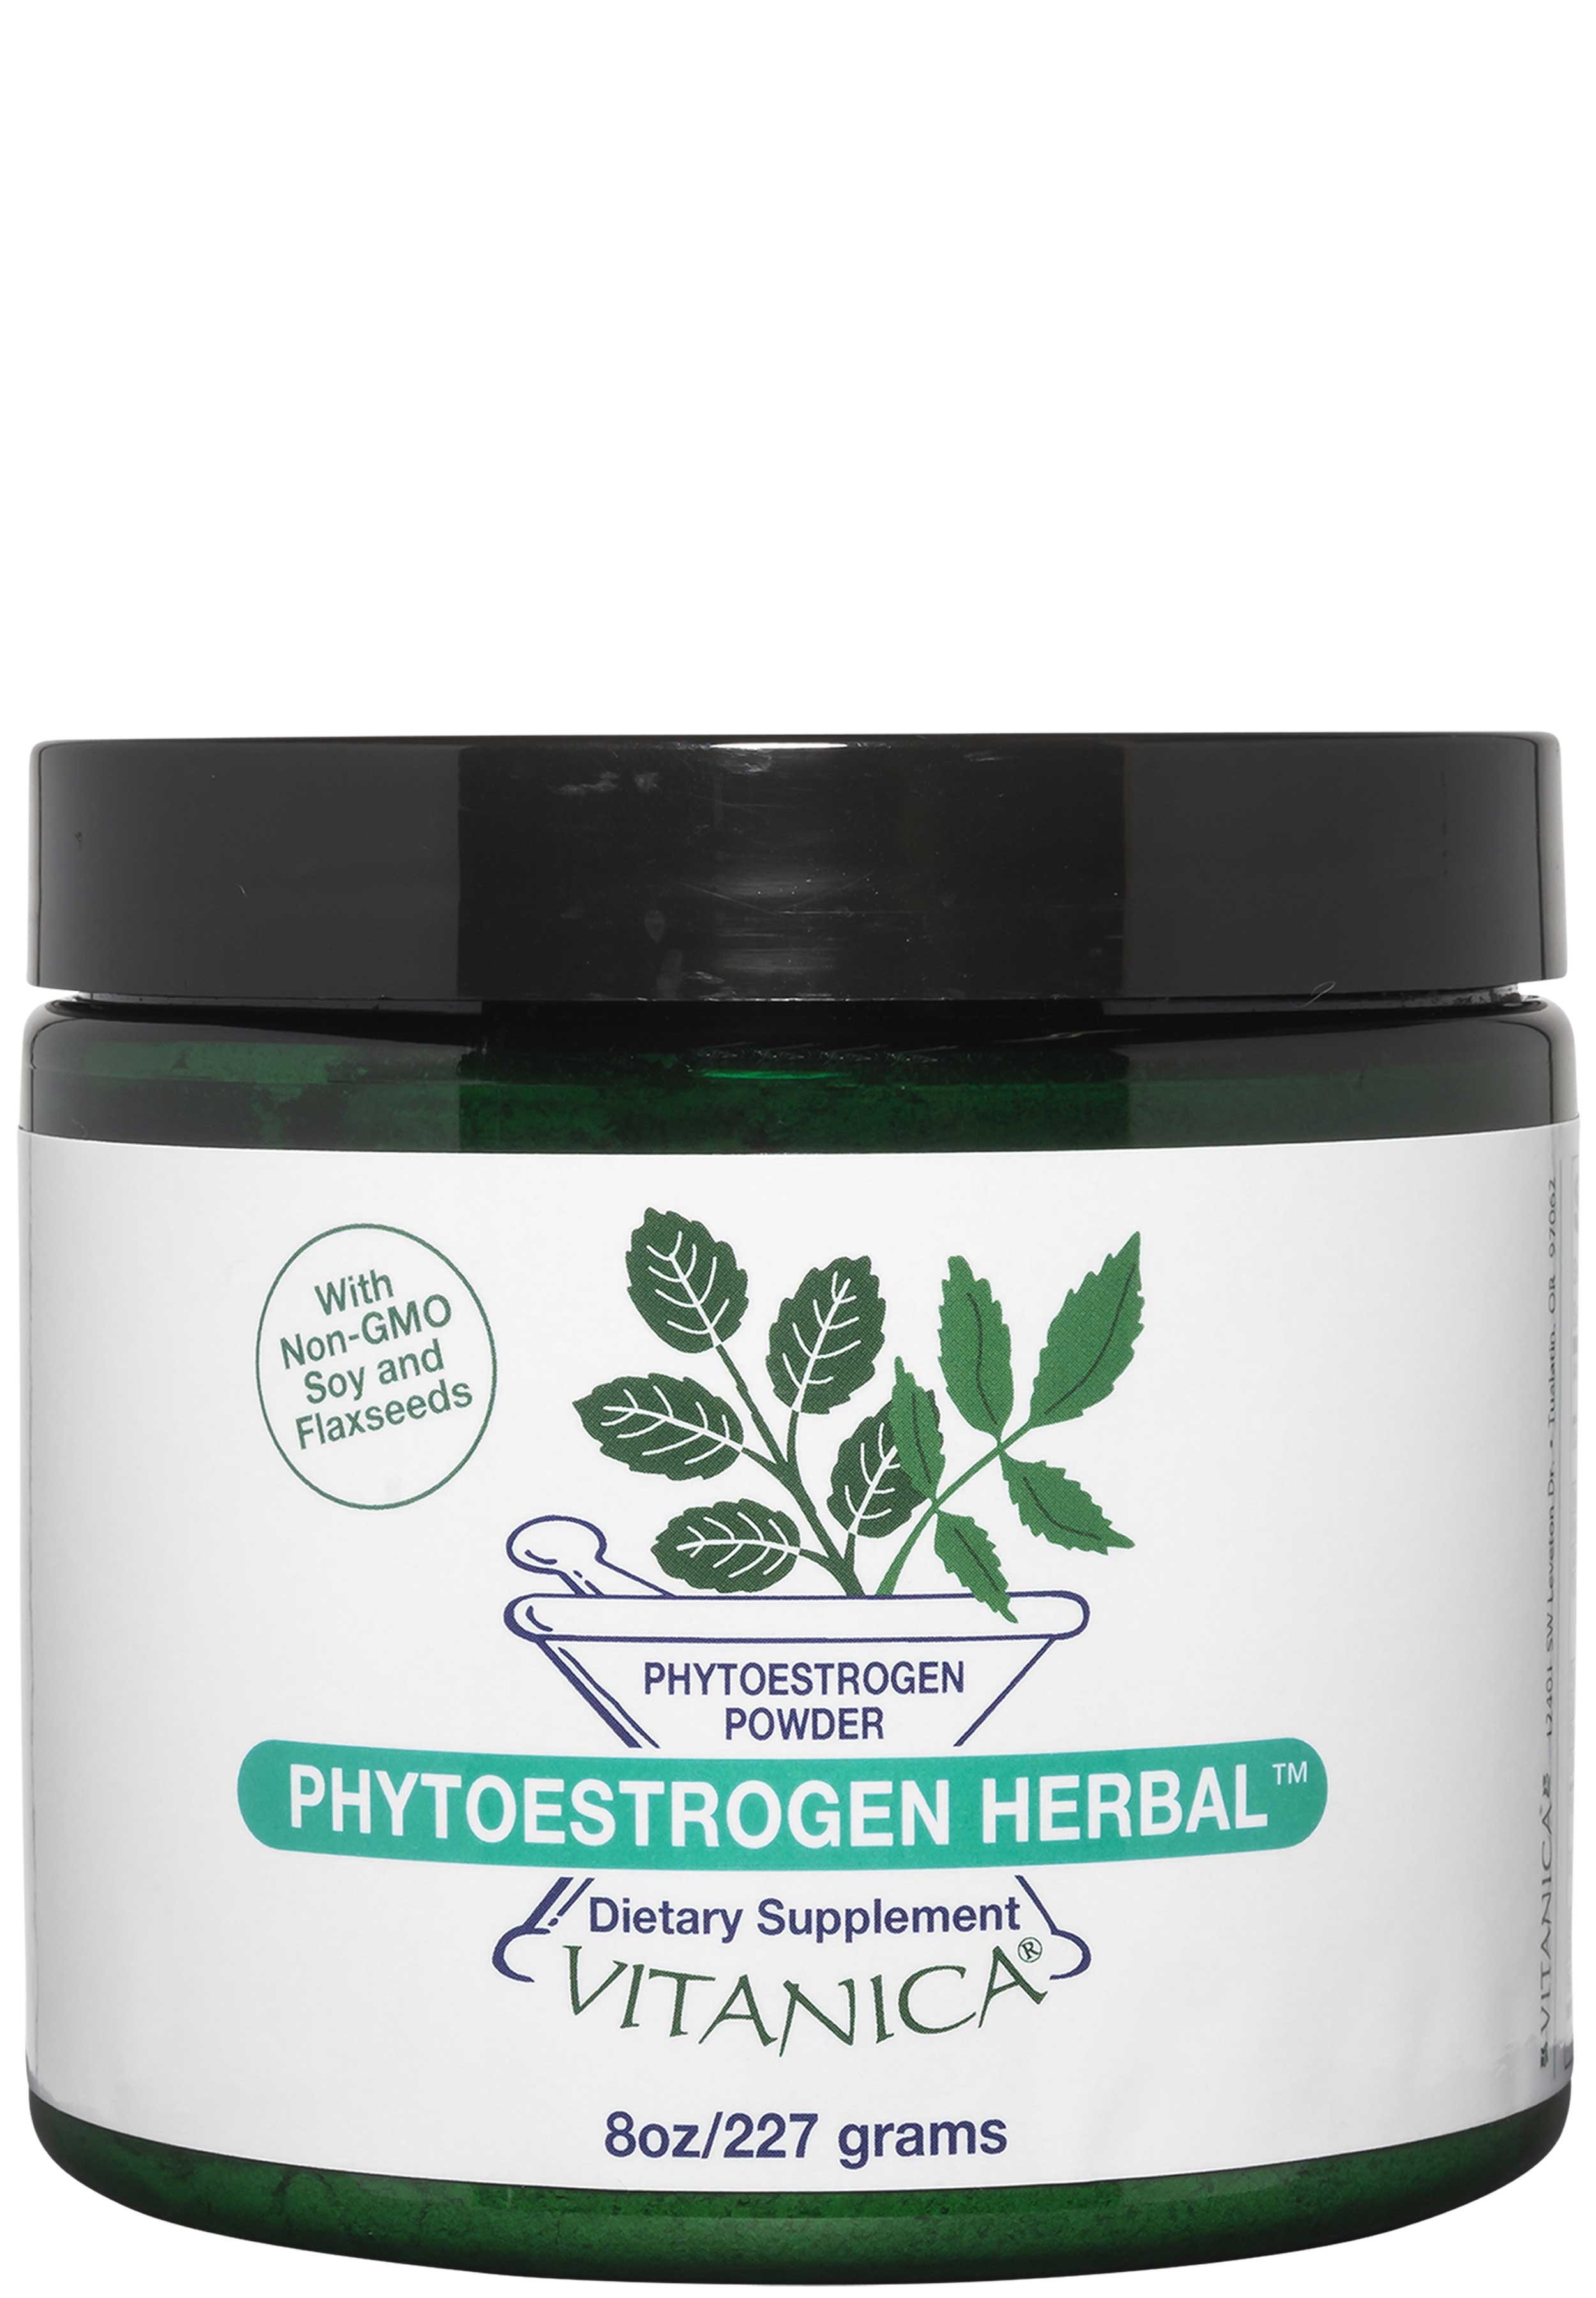 Vitanica PhytoEstrogen Herbal